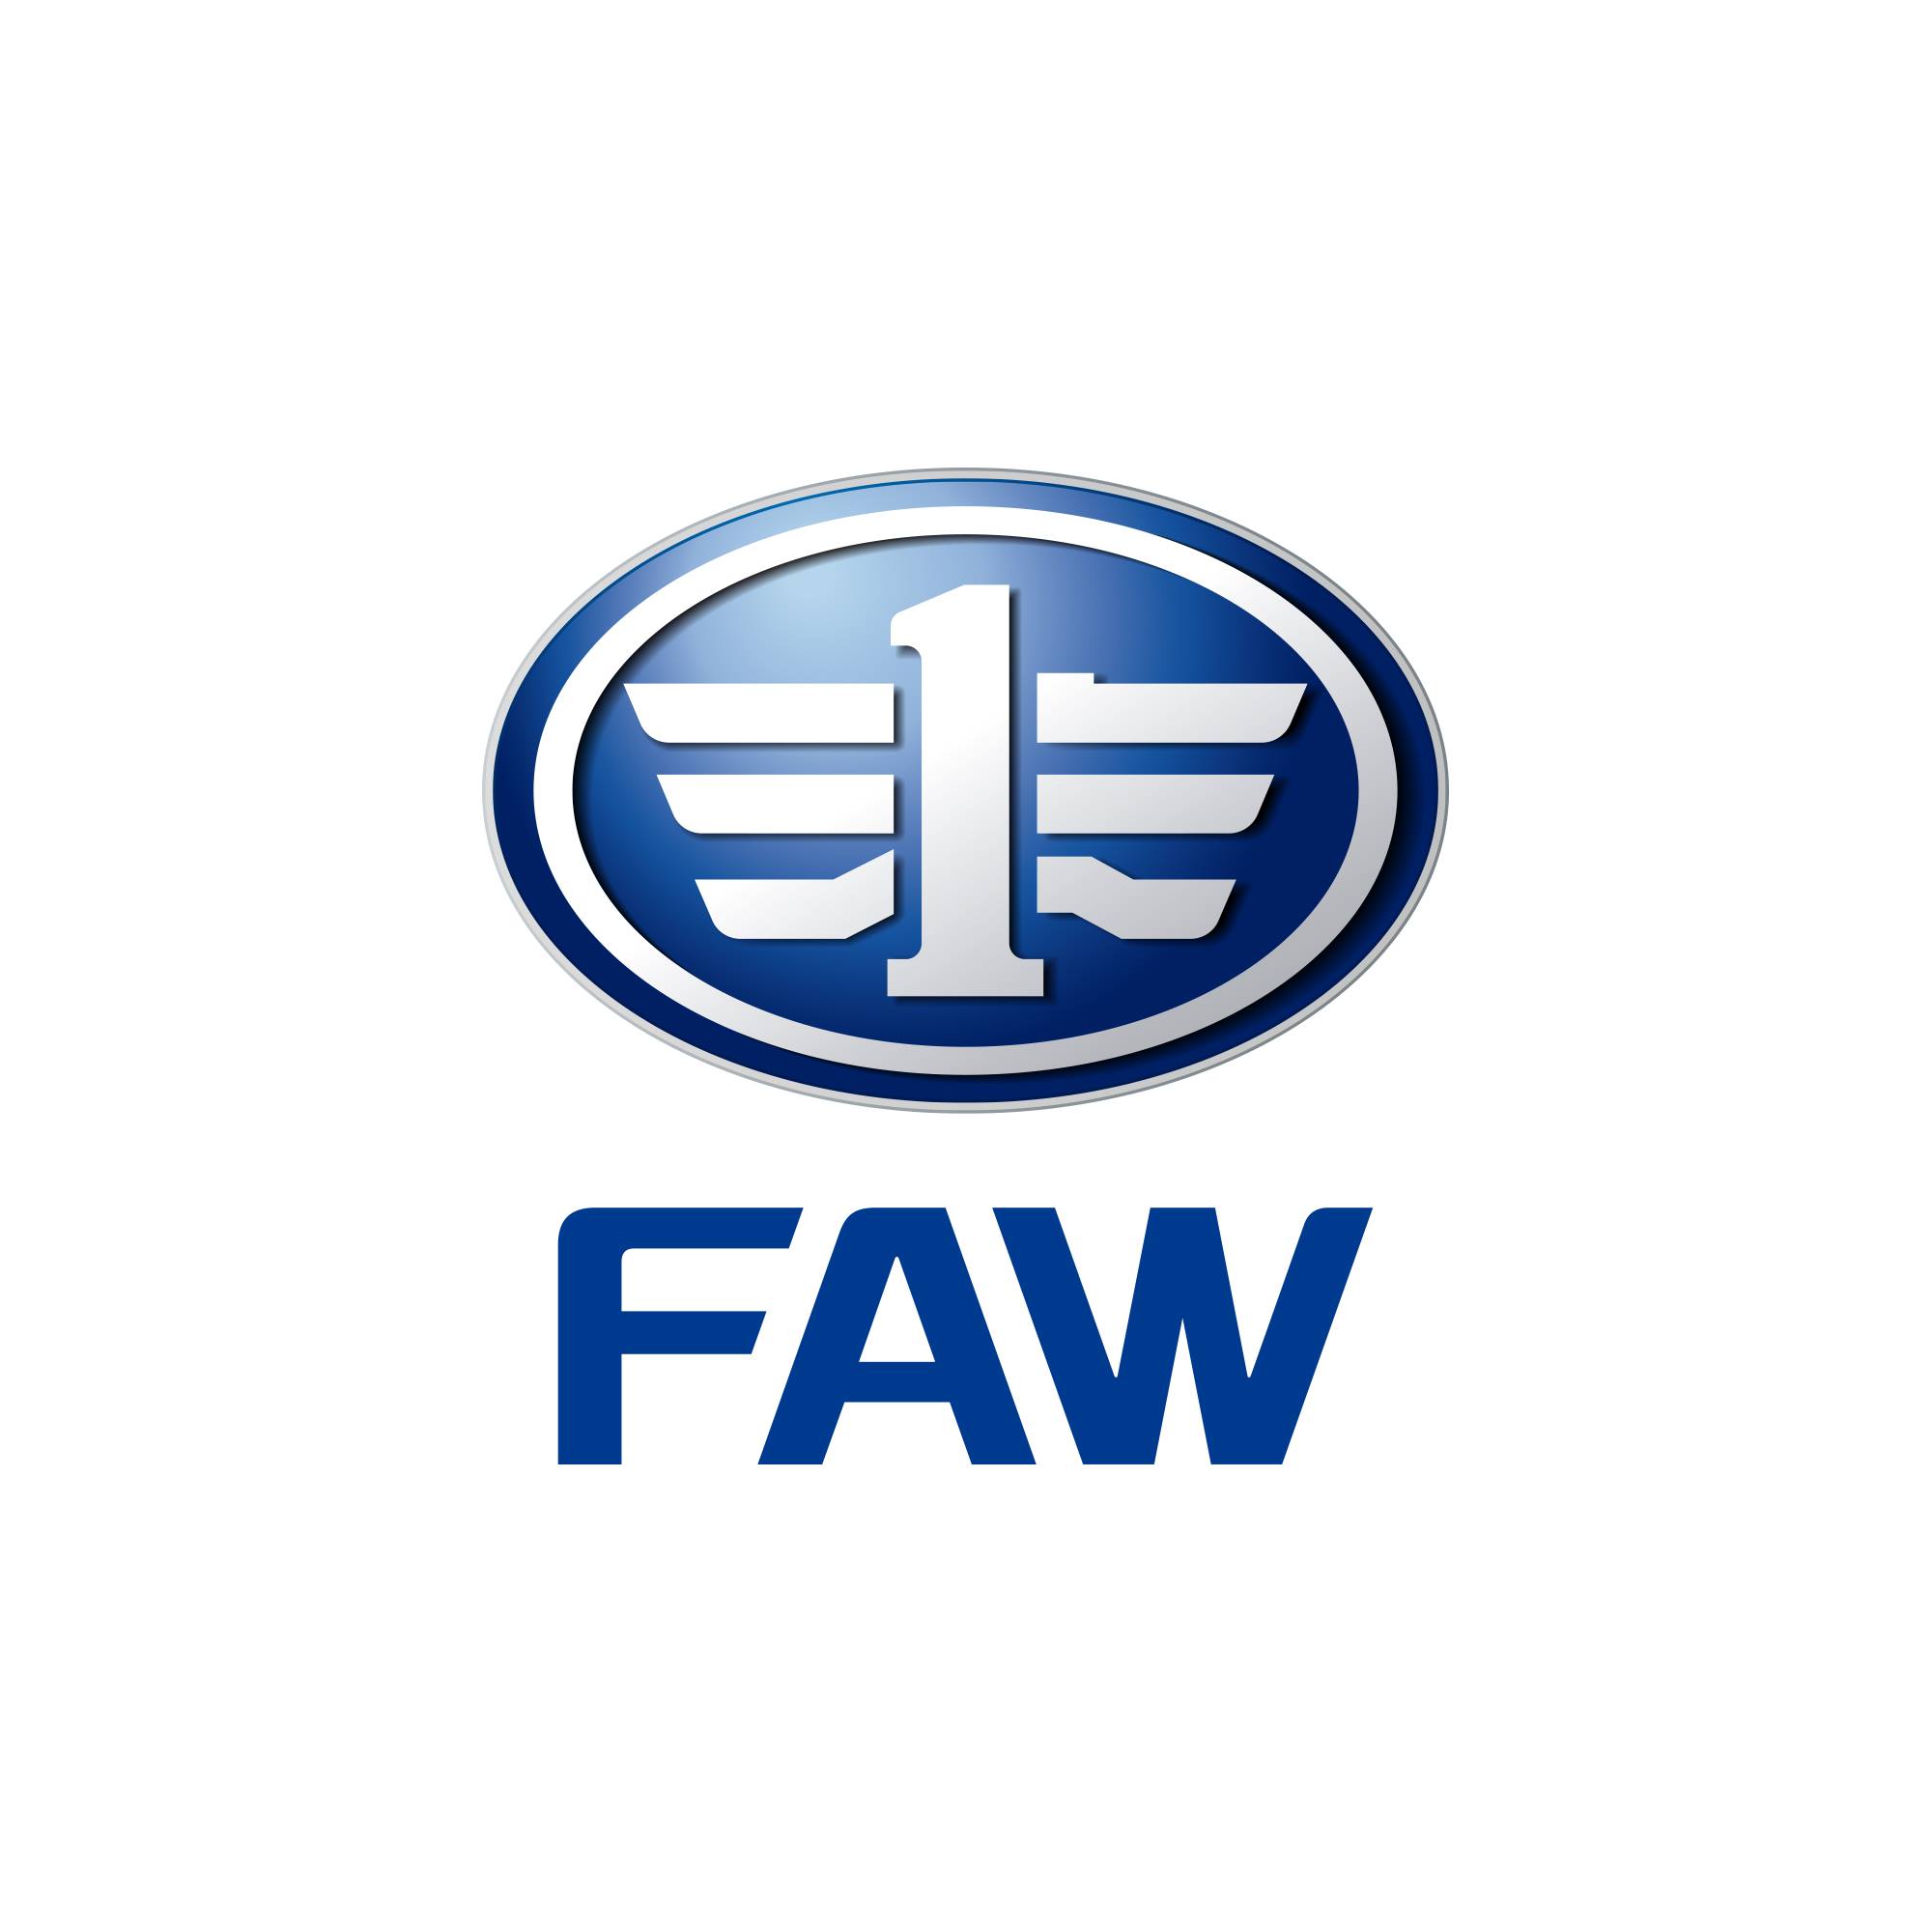 China FAW Group